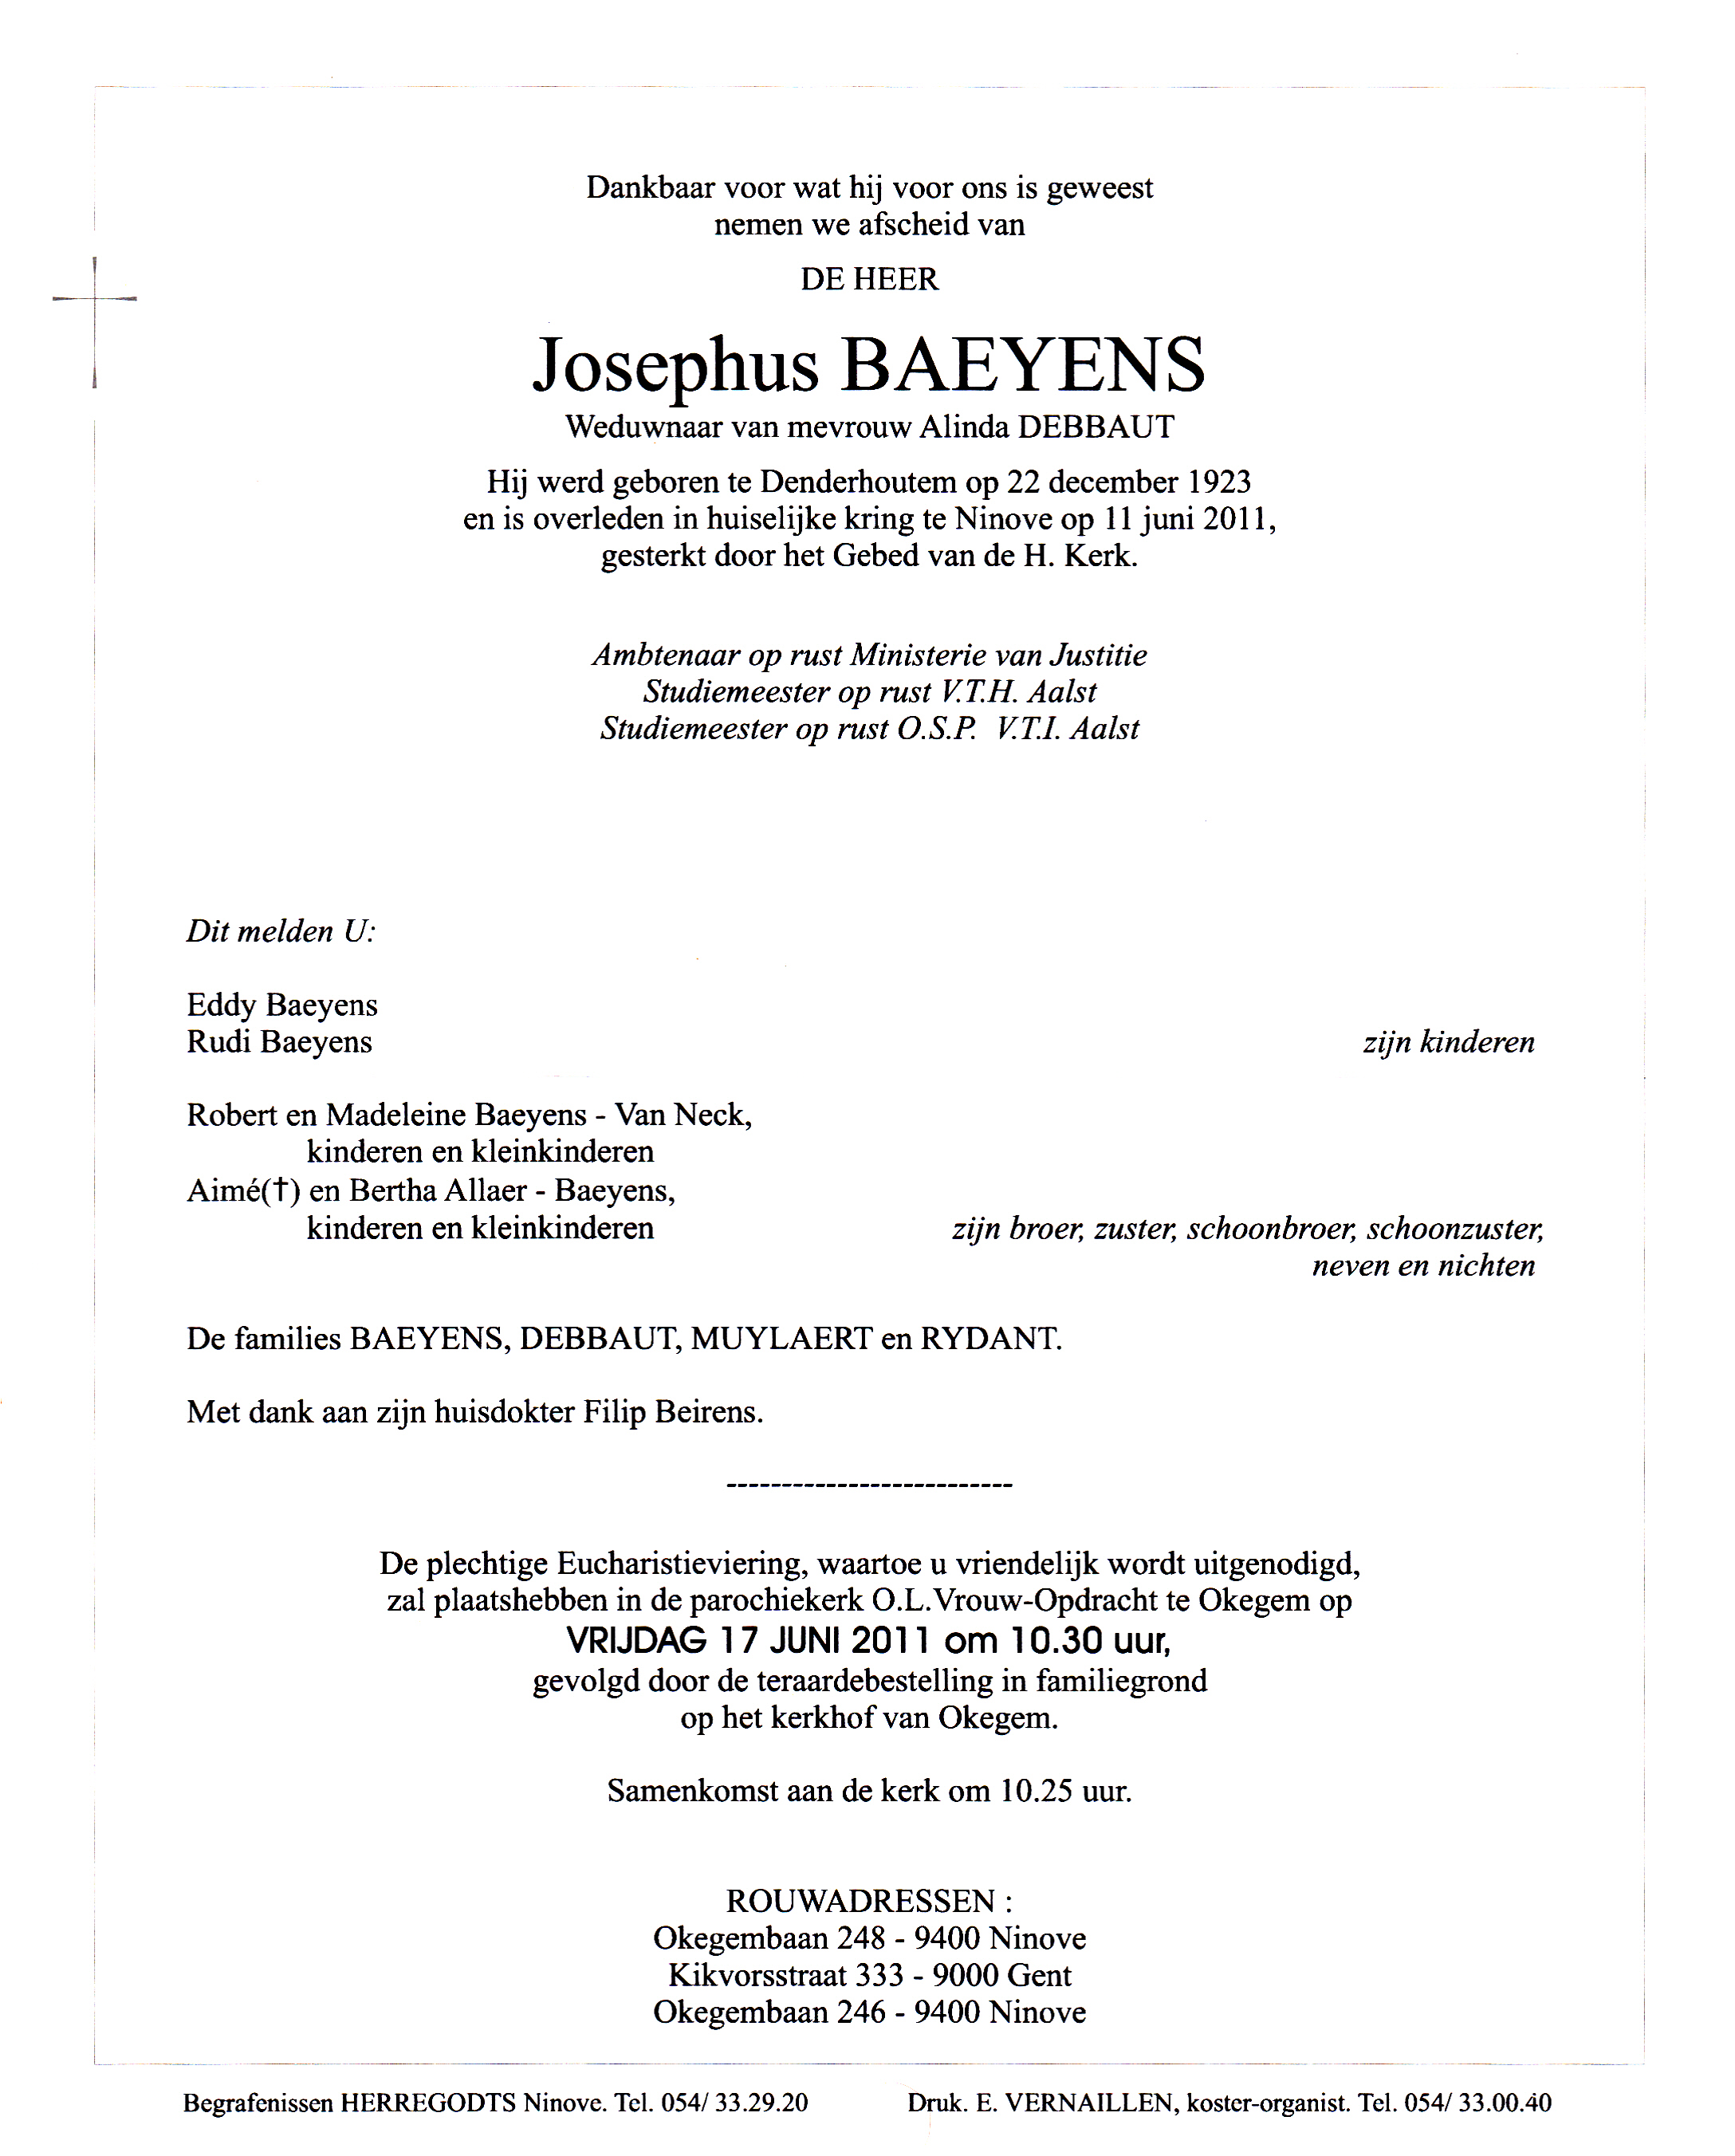 Baeyens Josephus